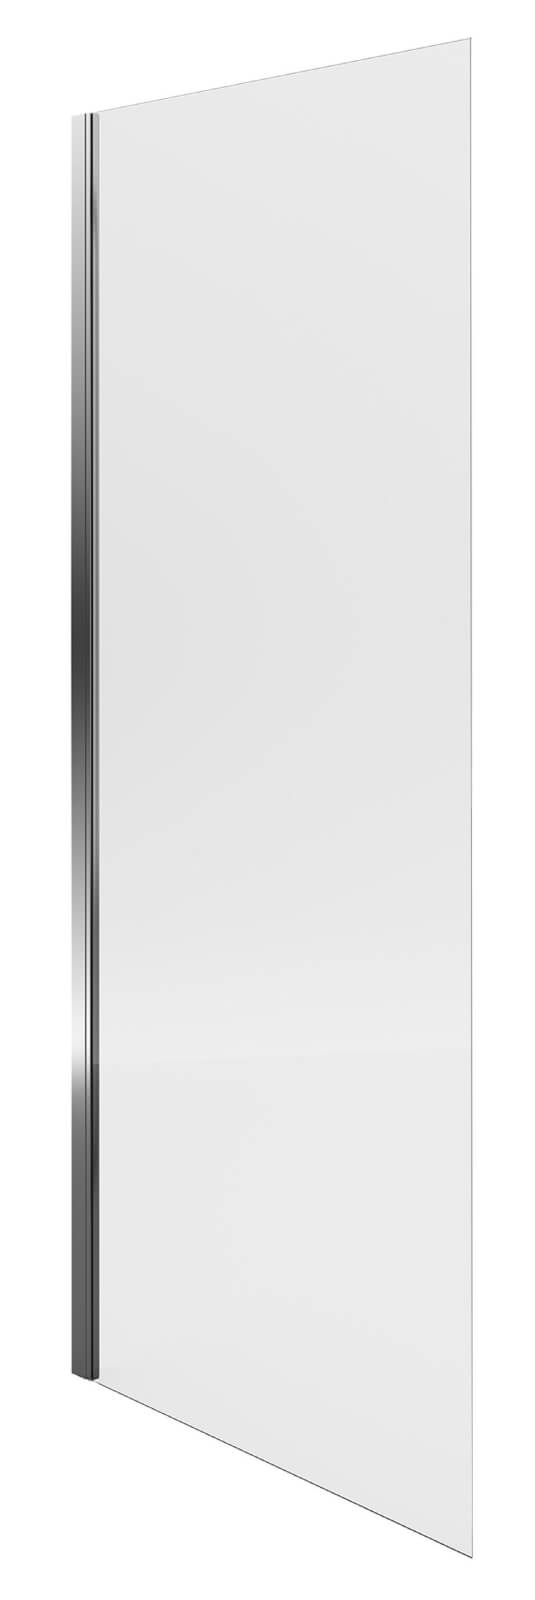 Mondella Shower Enclosure Side Panel - 900mm - Silver